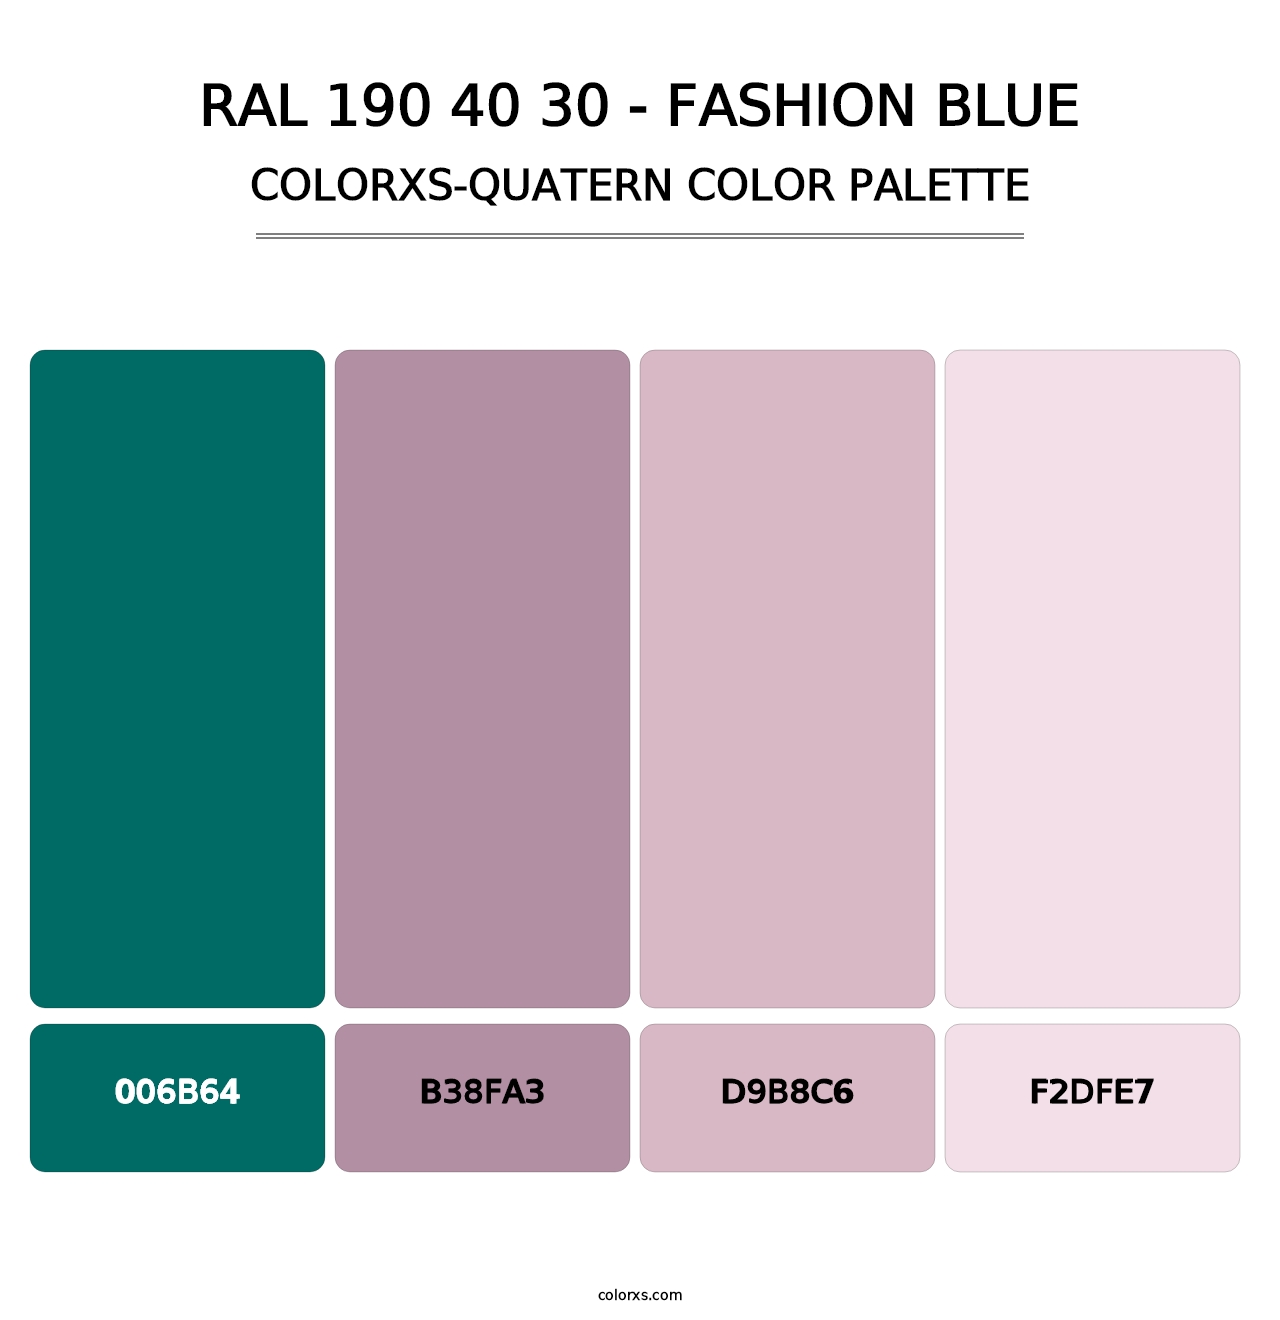 RAL 190 40 30 - Fashion Blue - Colorxs Quatern Palette